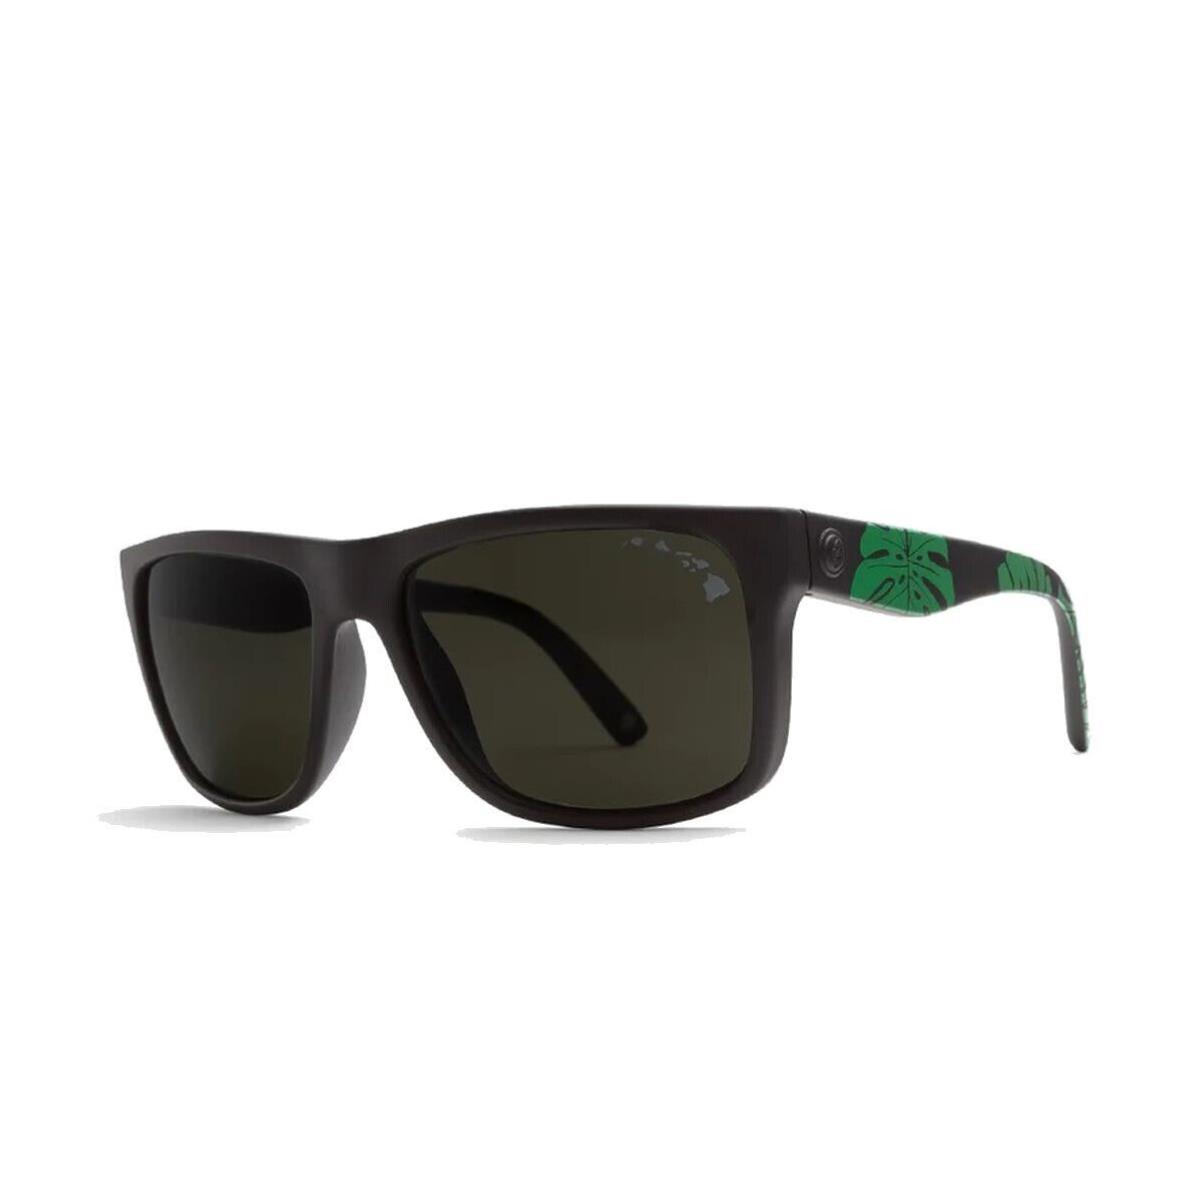 Electric Swingarm Sunglasses Hawaii Black Green with Grey Polarized Lens